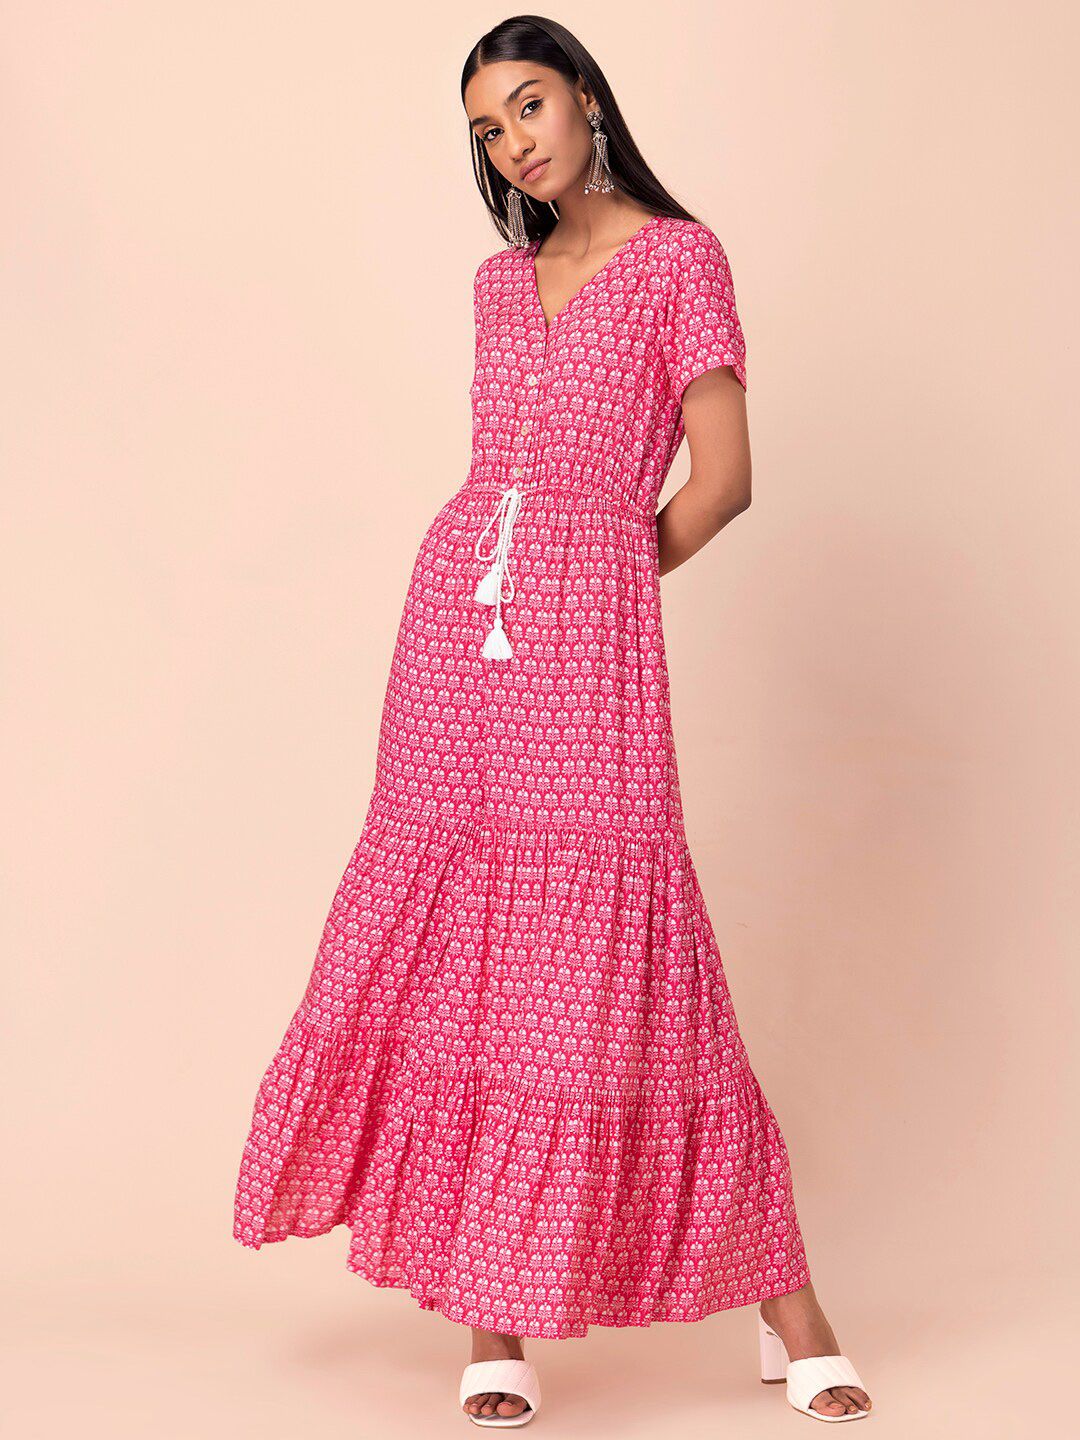 INDYA Pink Printed Basic Jumpsuit Price in India